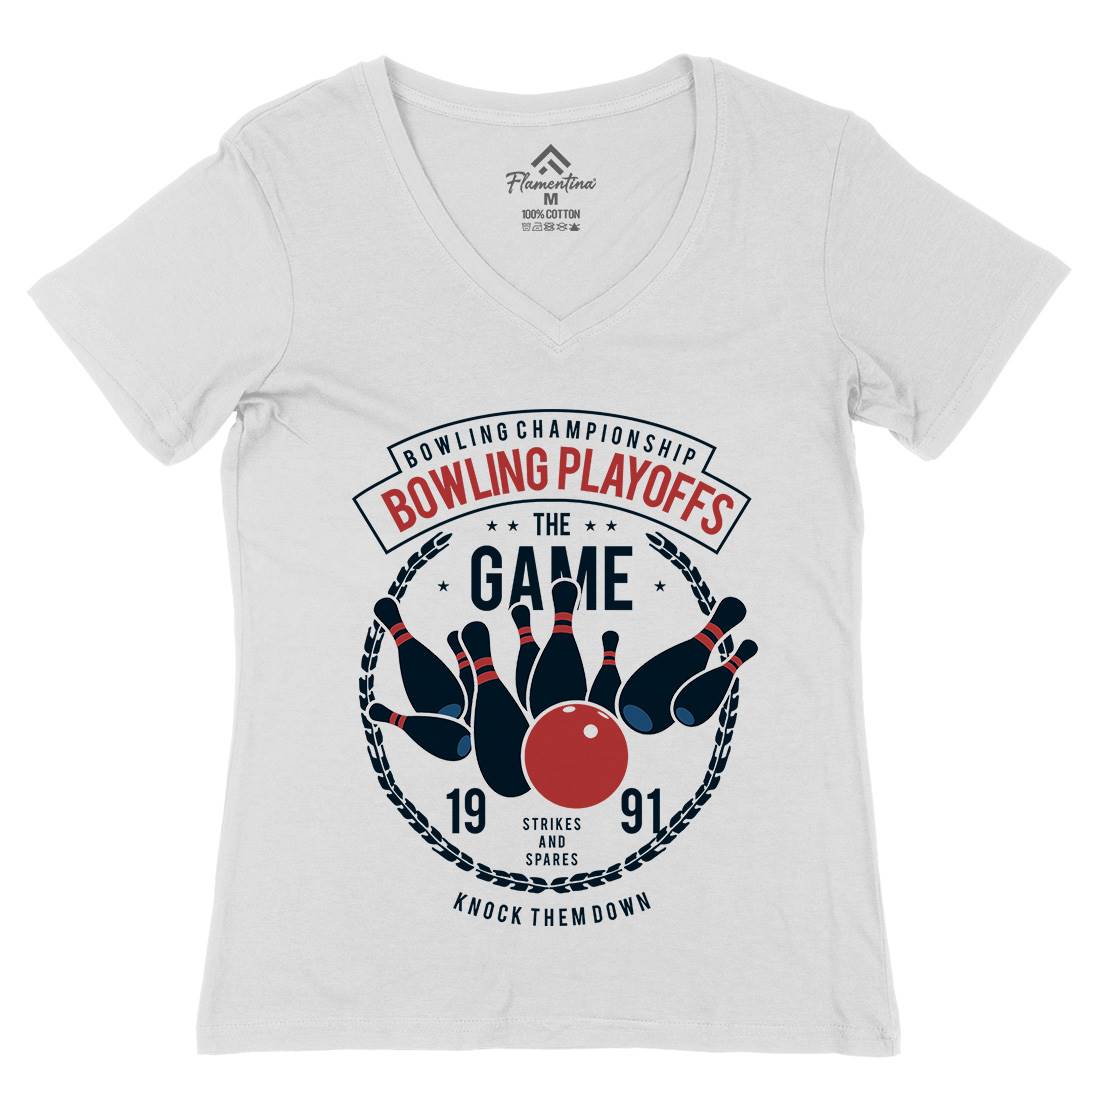 Bowling Playoffs Womens Organic V-Neck T-Shirt Sport B384